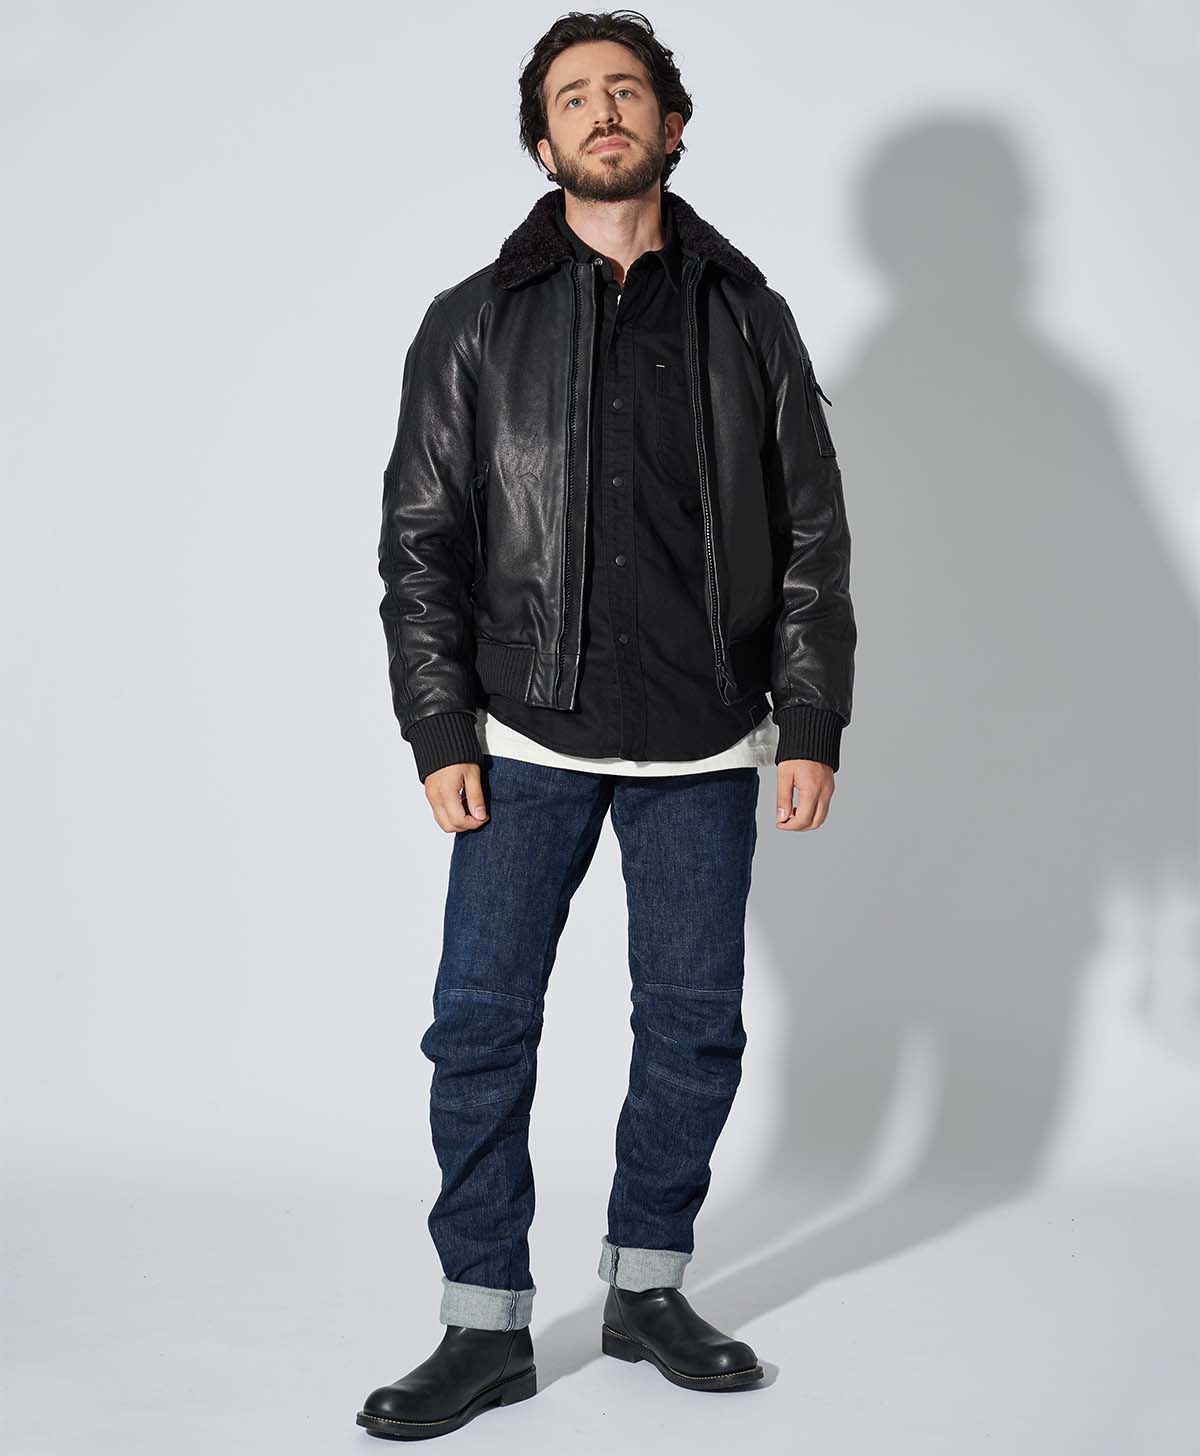 Leather jacket Leather flight jacket | Kadoya official online shop ...